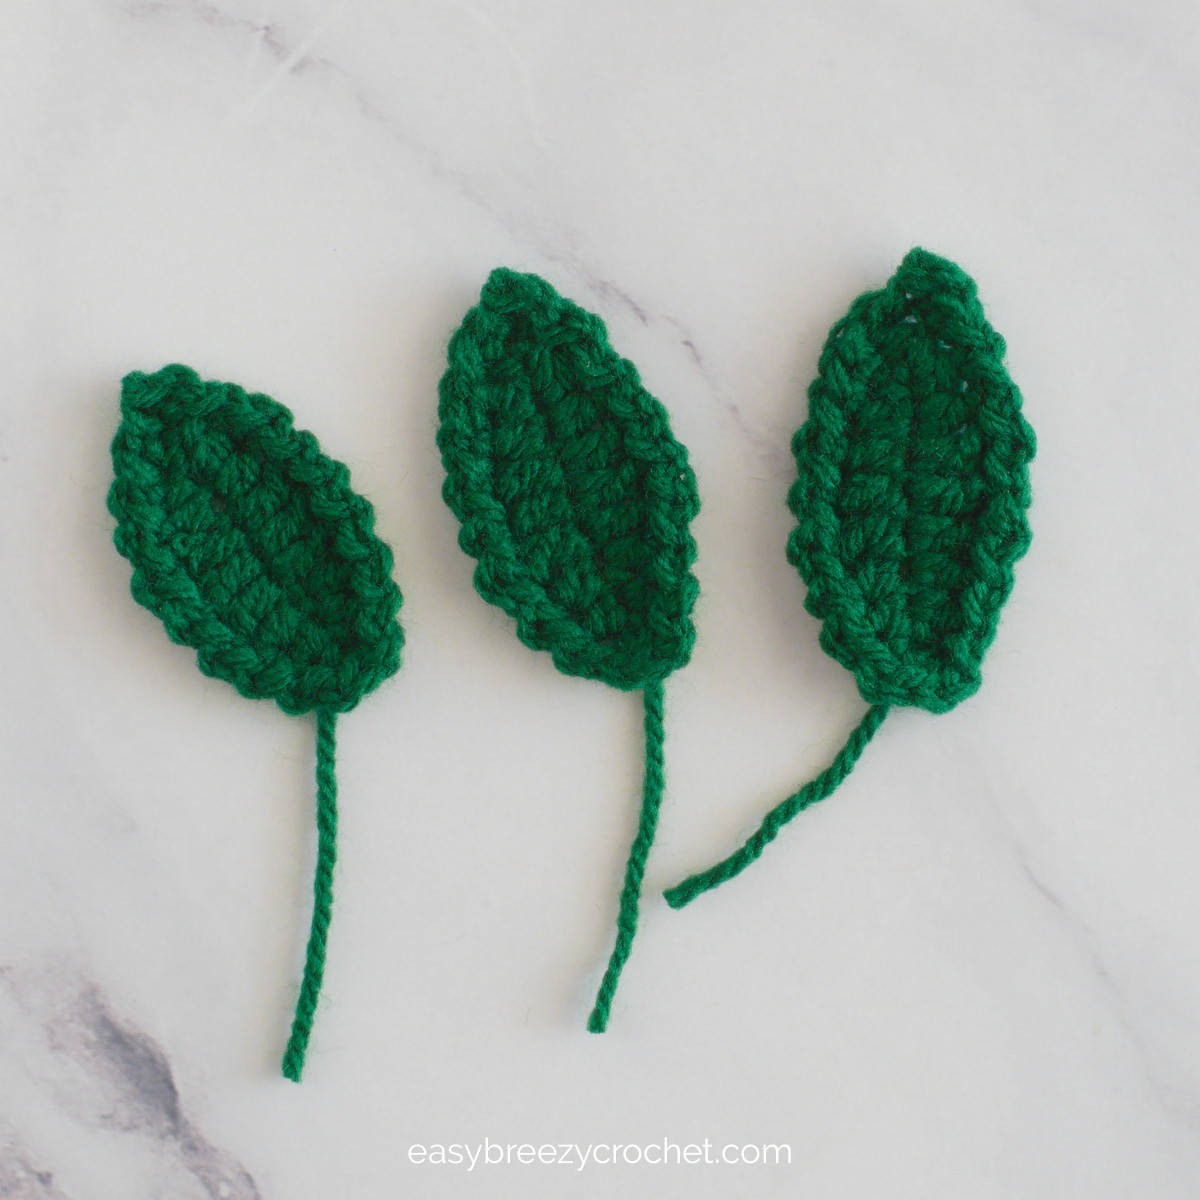 Three crocheted leaves.